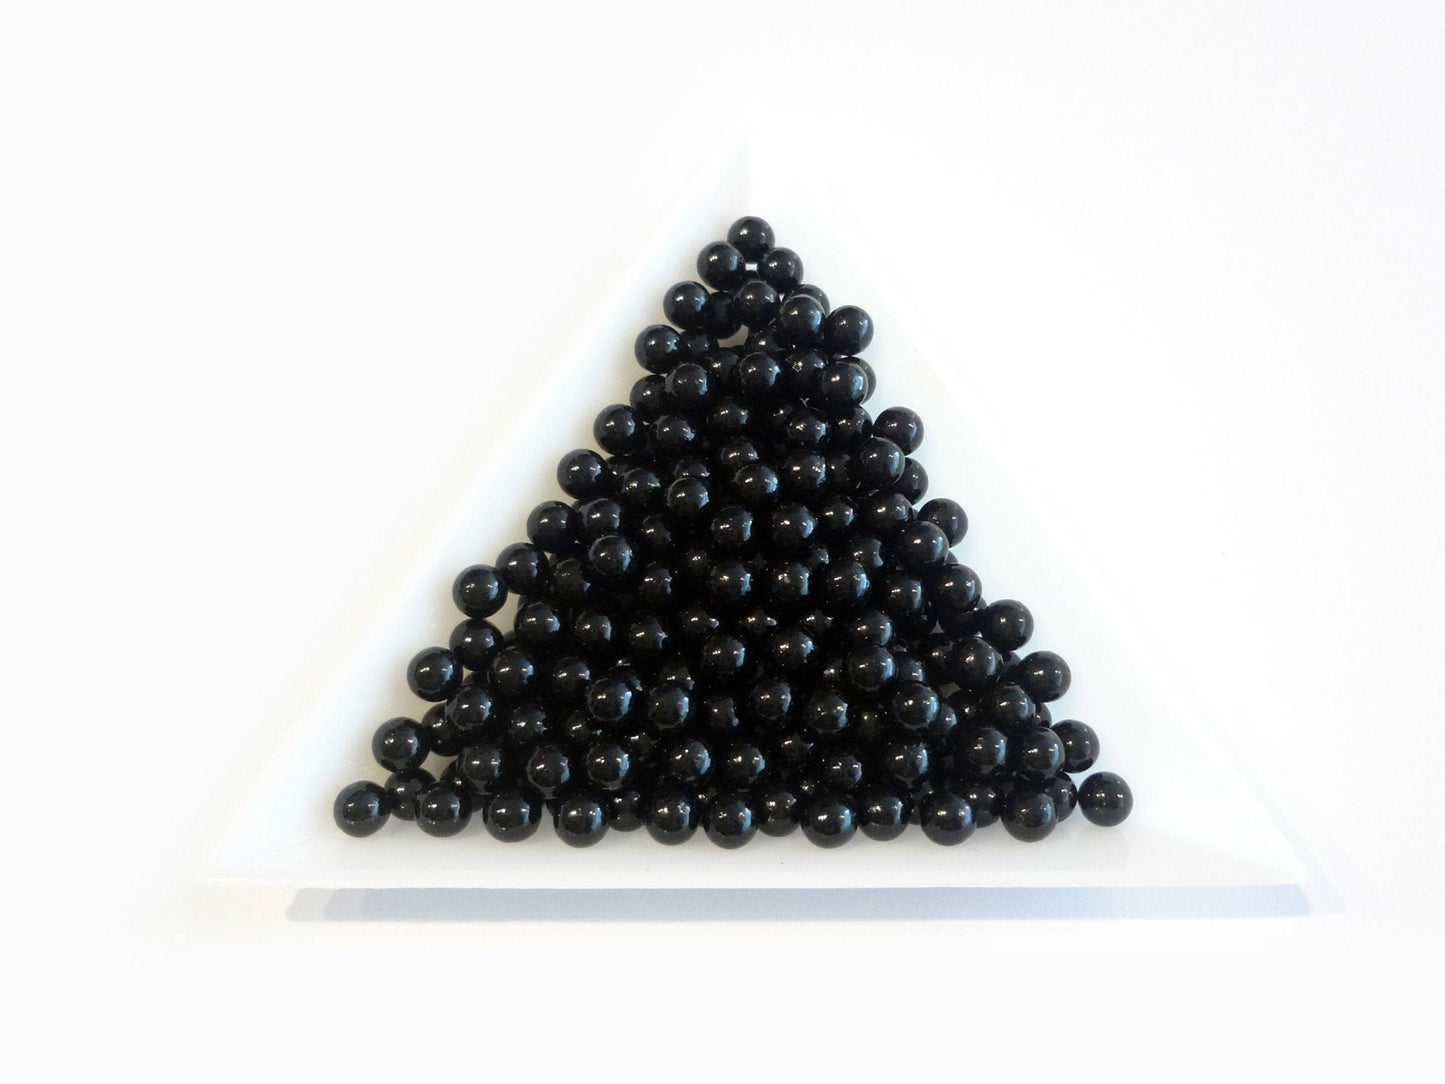 4mm Black Boba Pearls, No Hole Beads